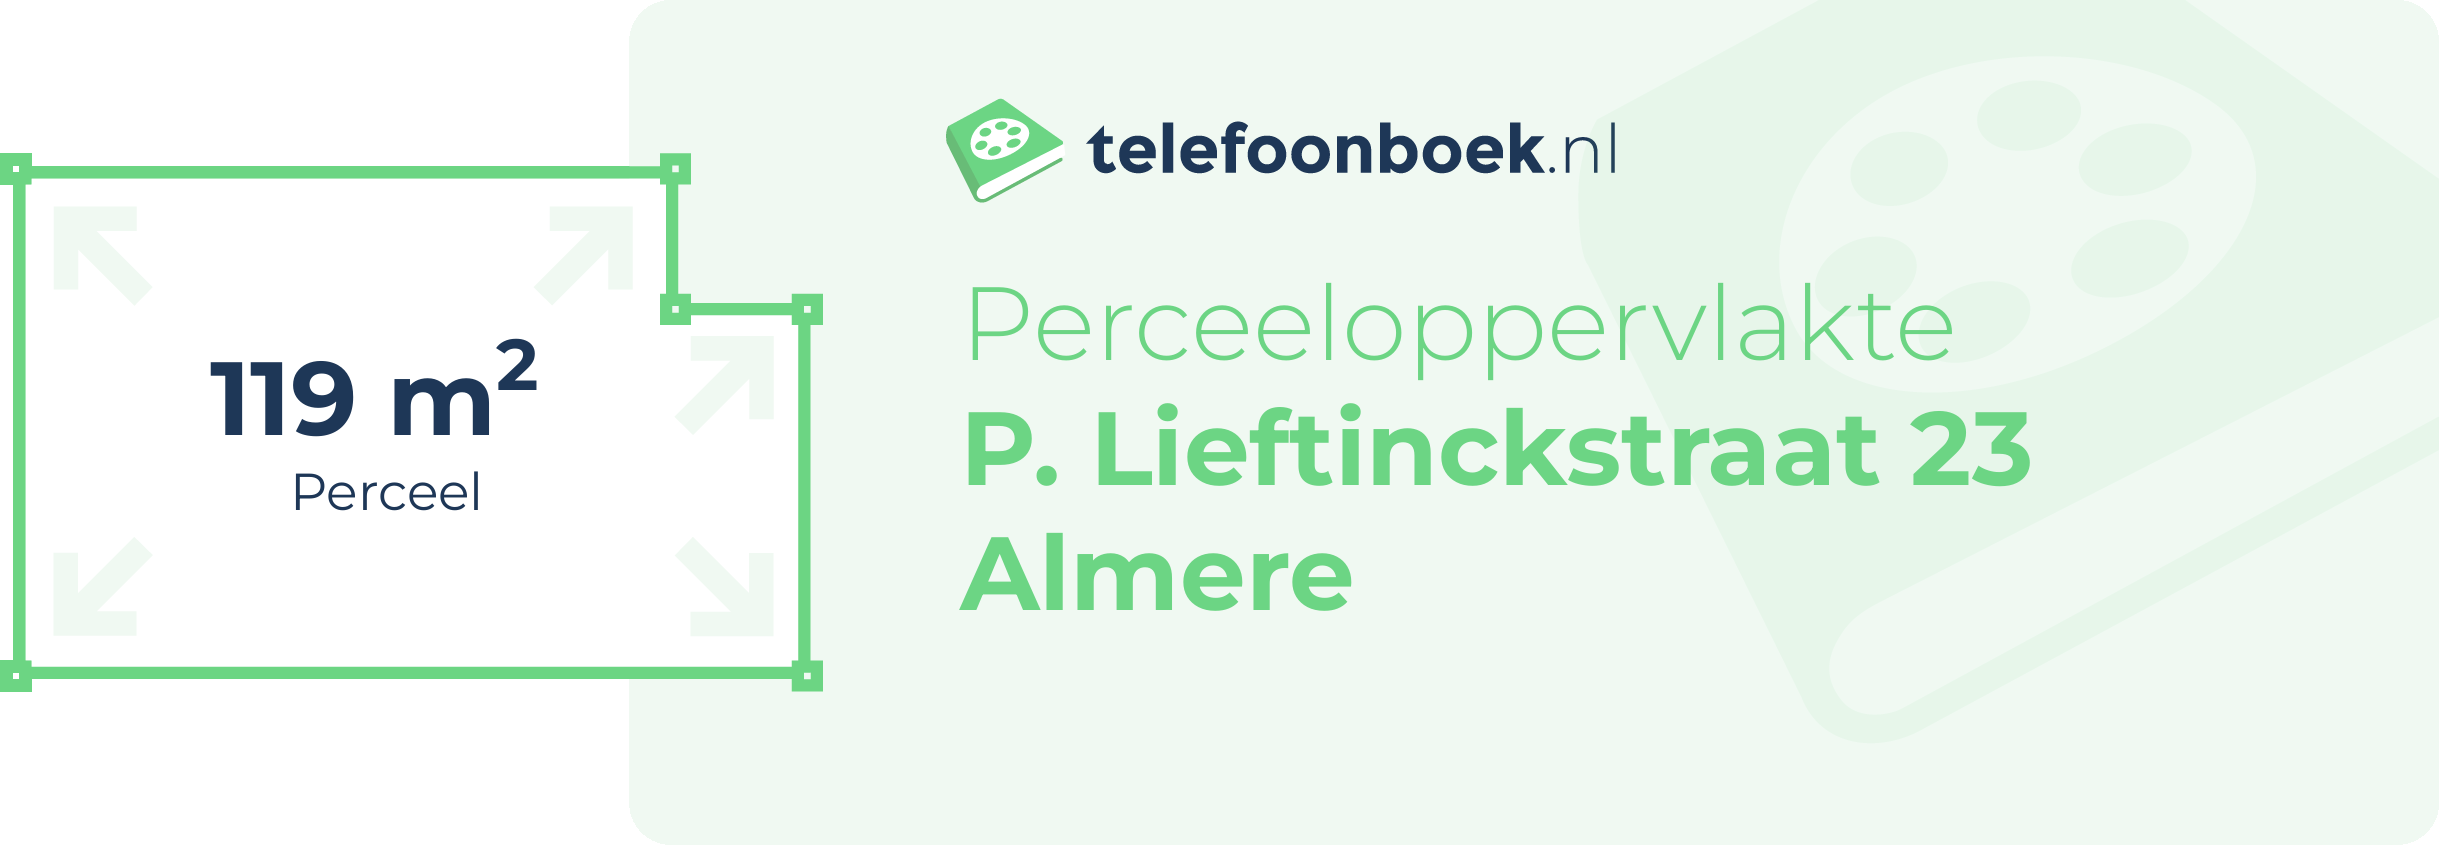 Perceeloppervlakte P. Lieftinckstraat 23 Almere